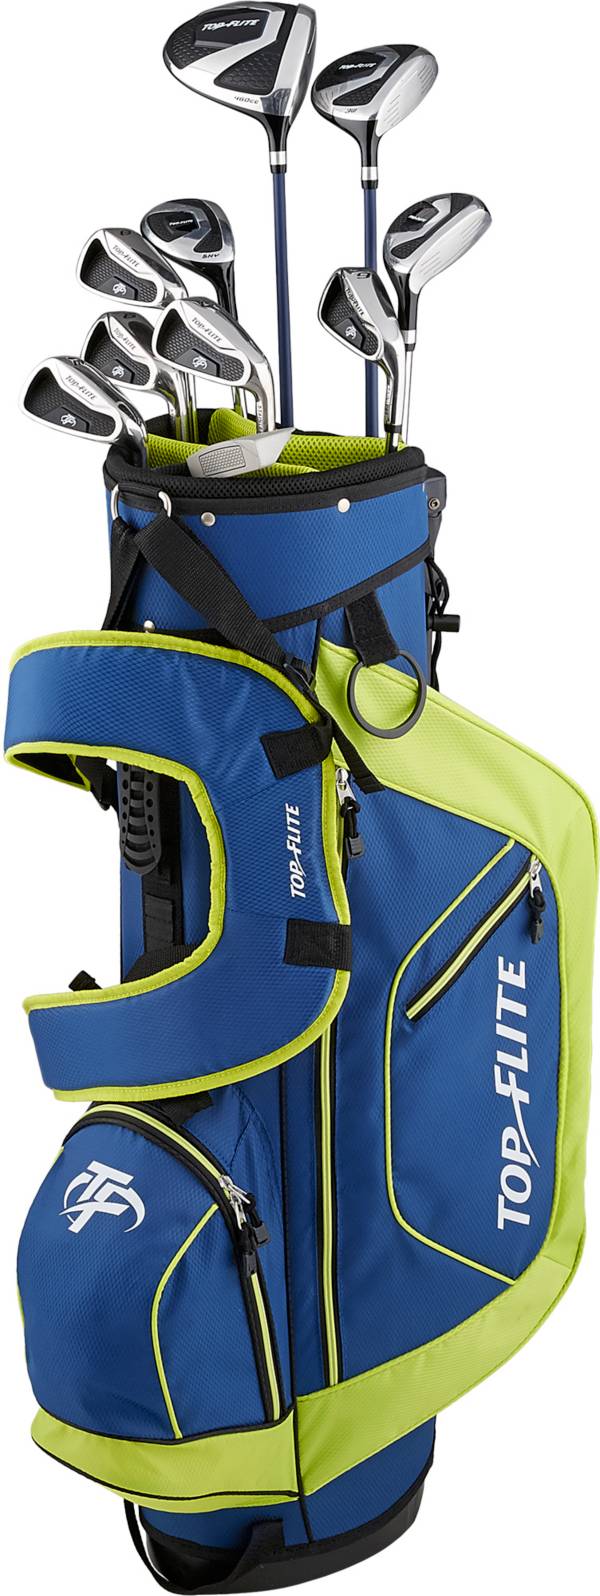 Top Flite 2020 XL Set (Graphite/Steel) | Back in at Golf Galaxy